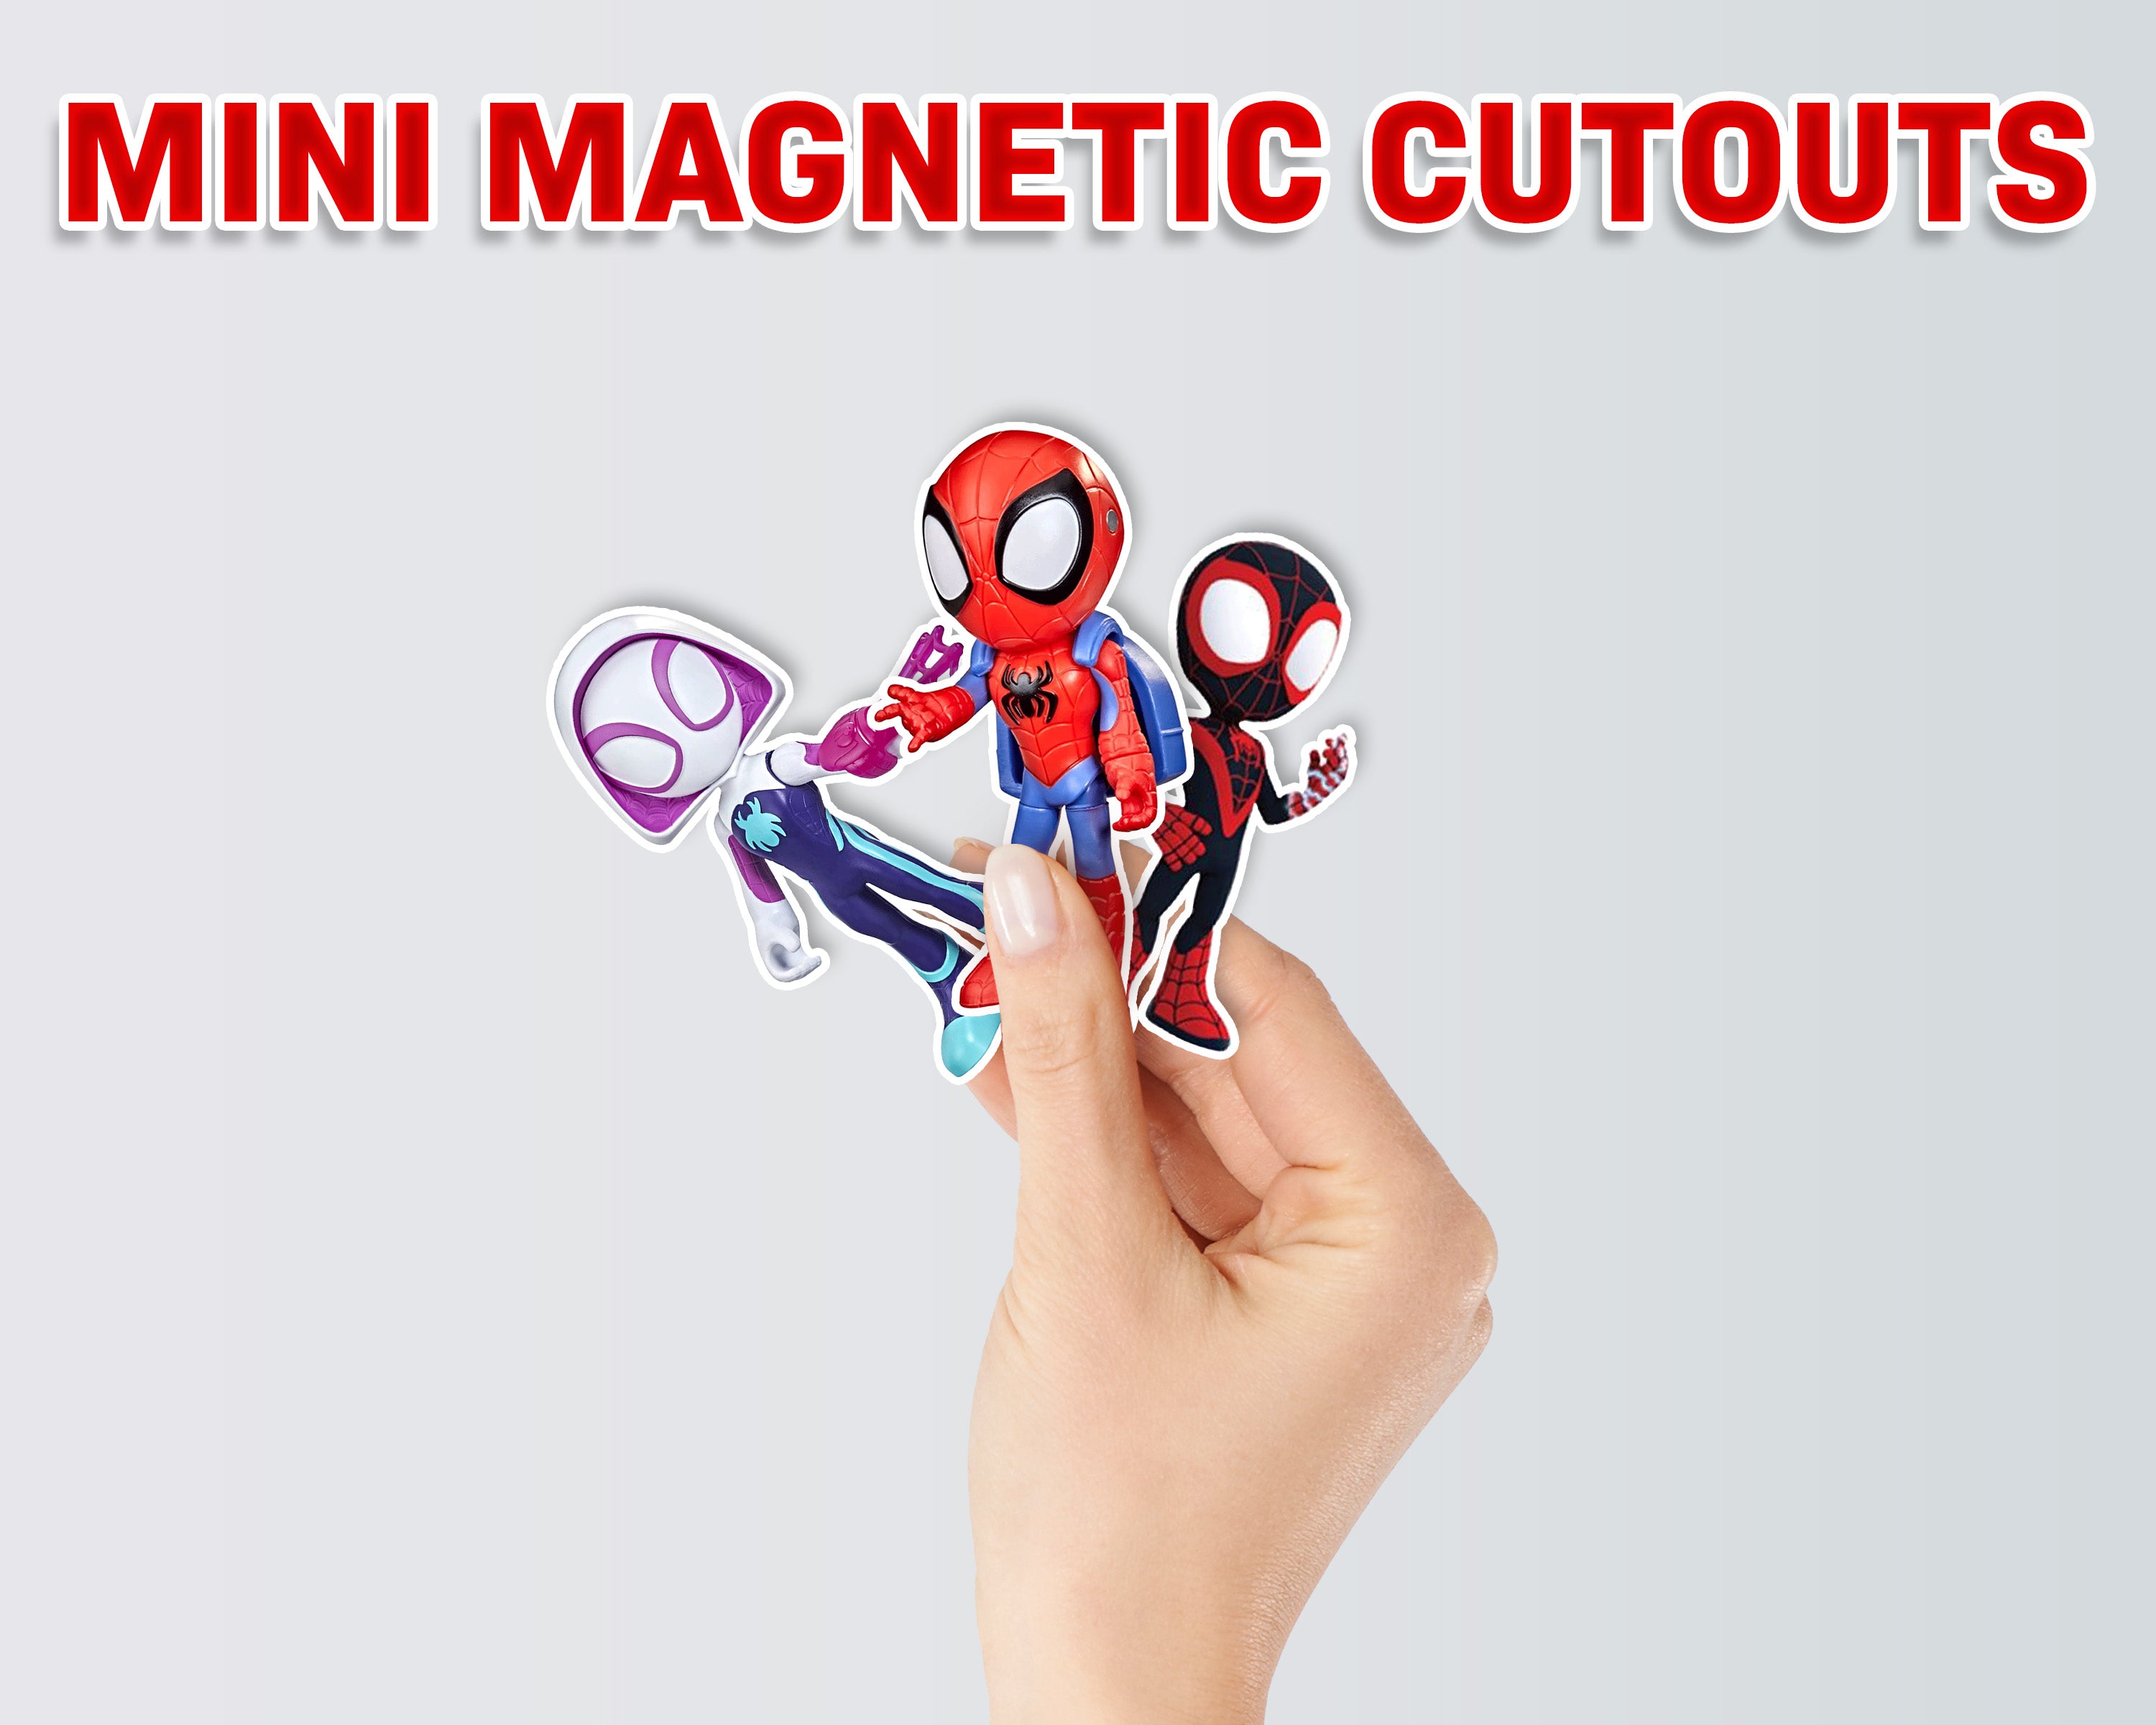 PSI Spidy Theme Mini Magnetic Return Gift Pack